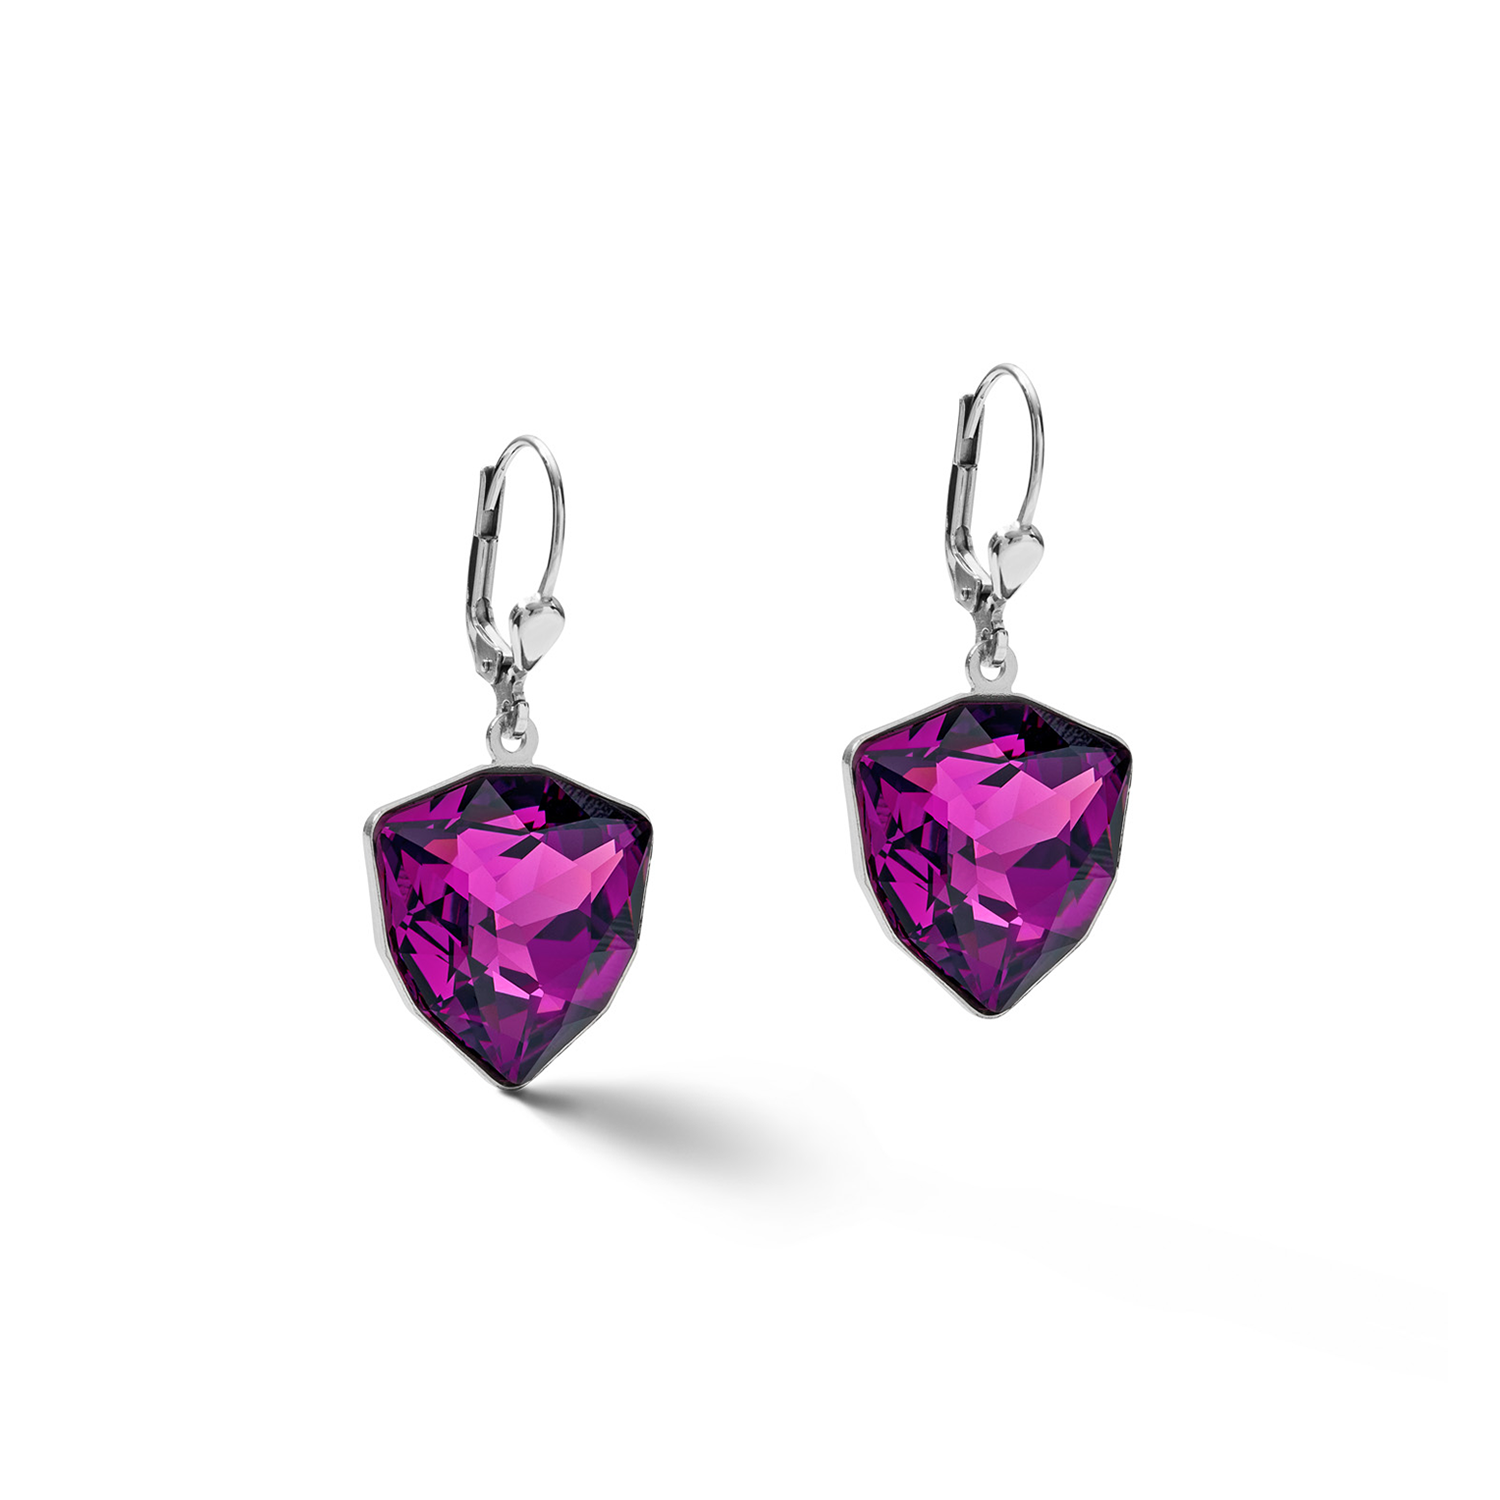 Purple European Crystal Pendant on Statement Chain Earrings 5054/20_0824